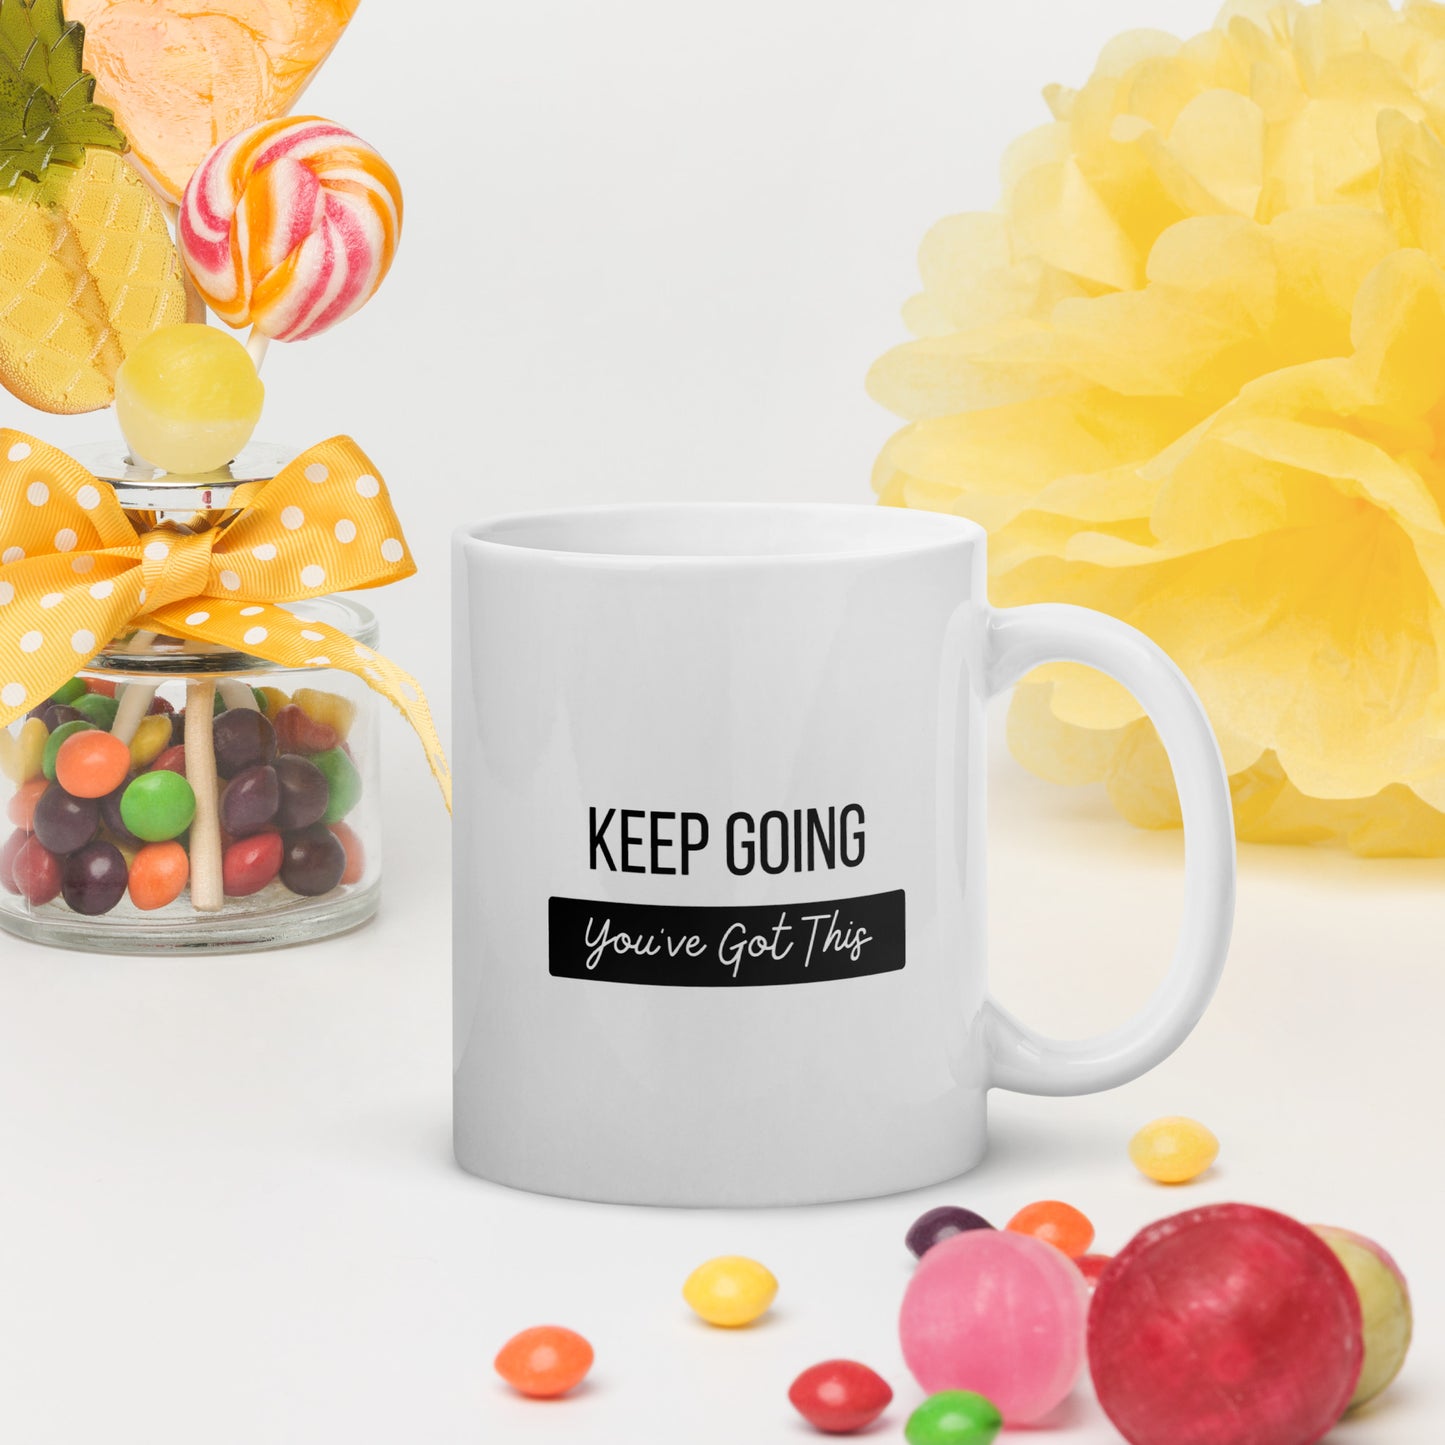 You've Got This Mug